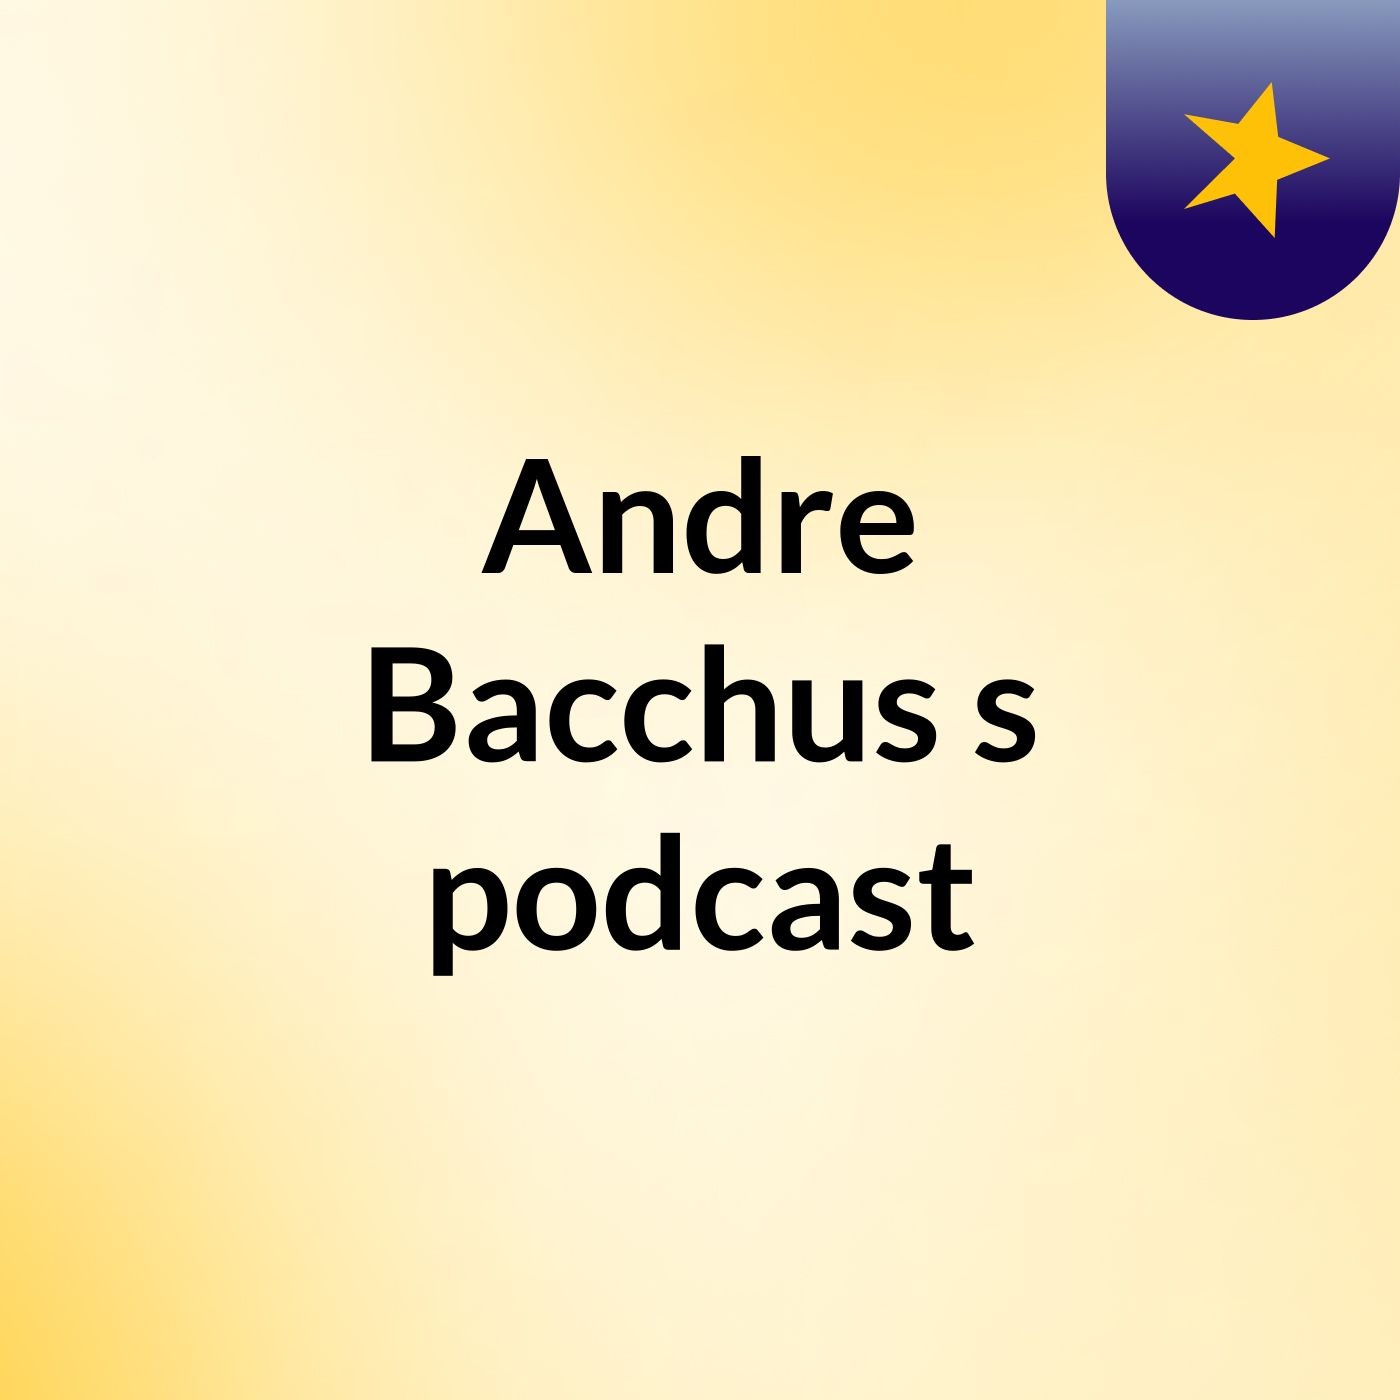 Episode 19 - Andre Bacchus's podcast